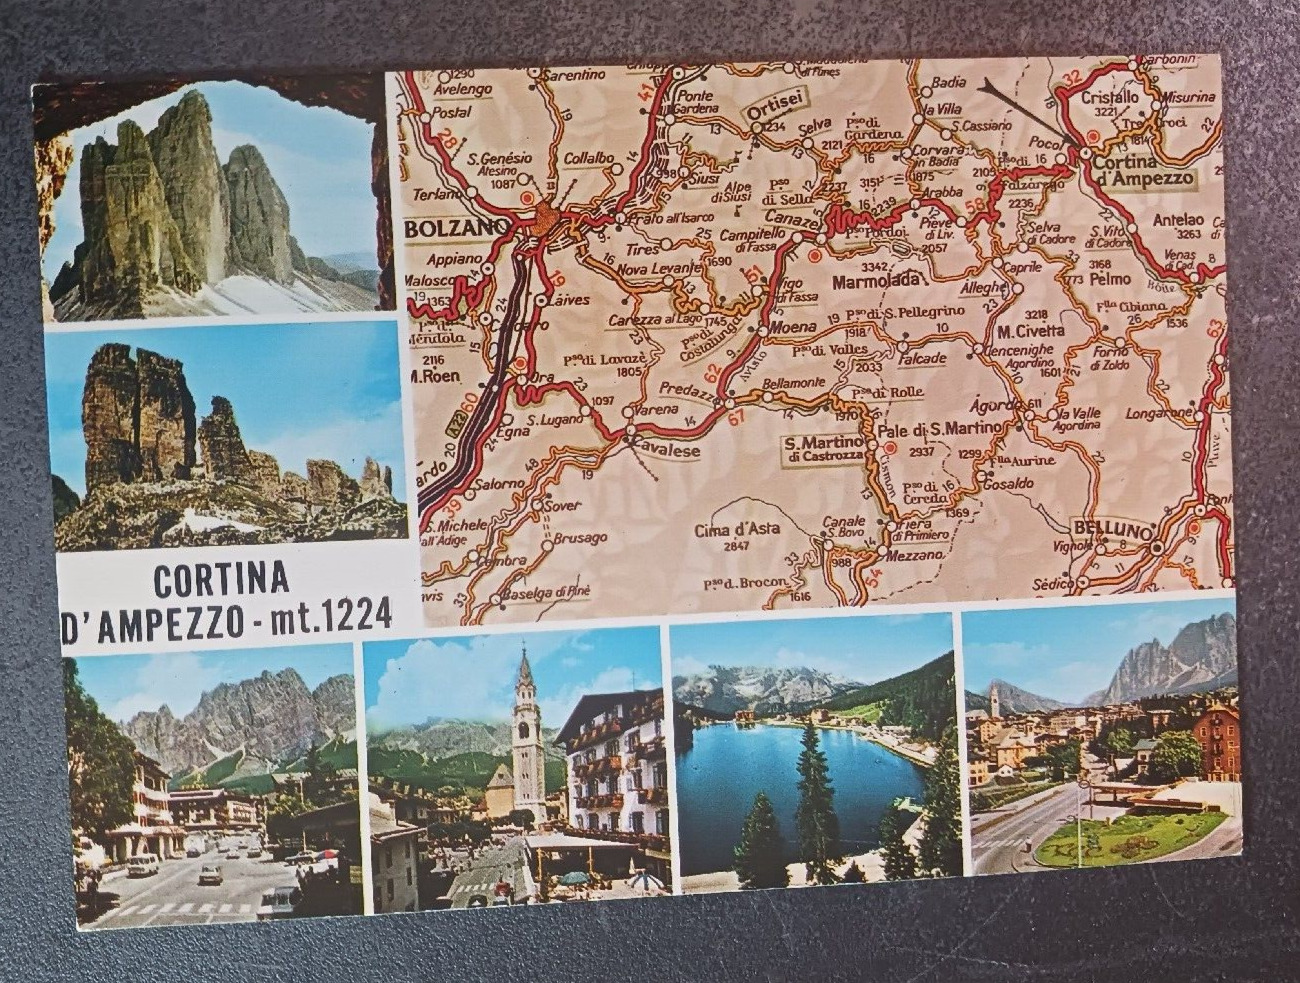 vtg postcard Cortina d\'Ampezzo mt 1224 Italy Dolomites TCI Touring Club Italiano